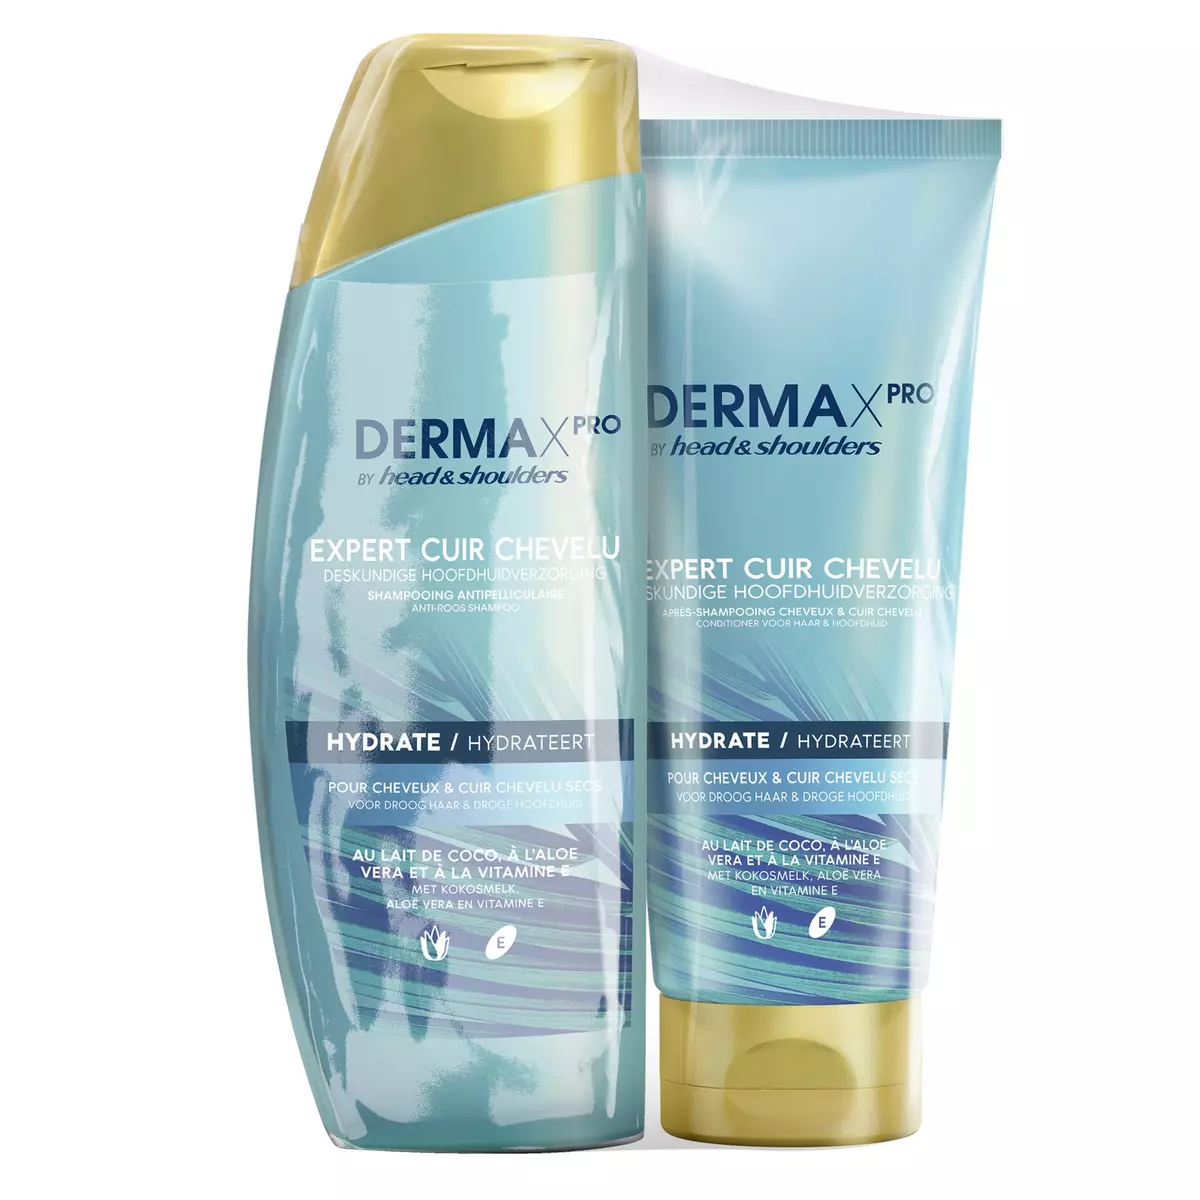 HEAD & SHOULDERS Derma pro shampooing et après-shampooing 225ml + 200ml